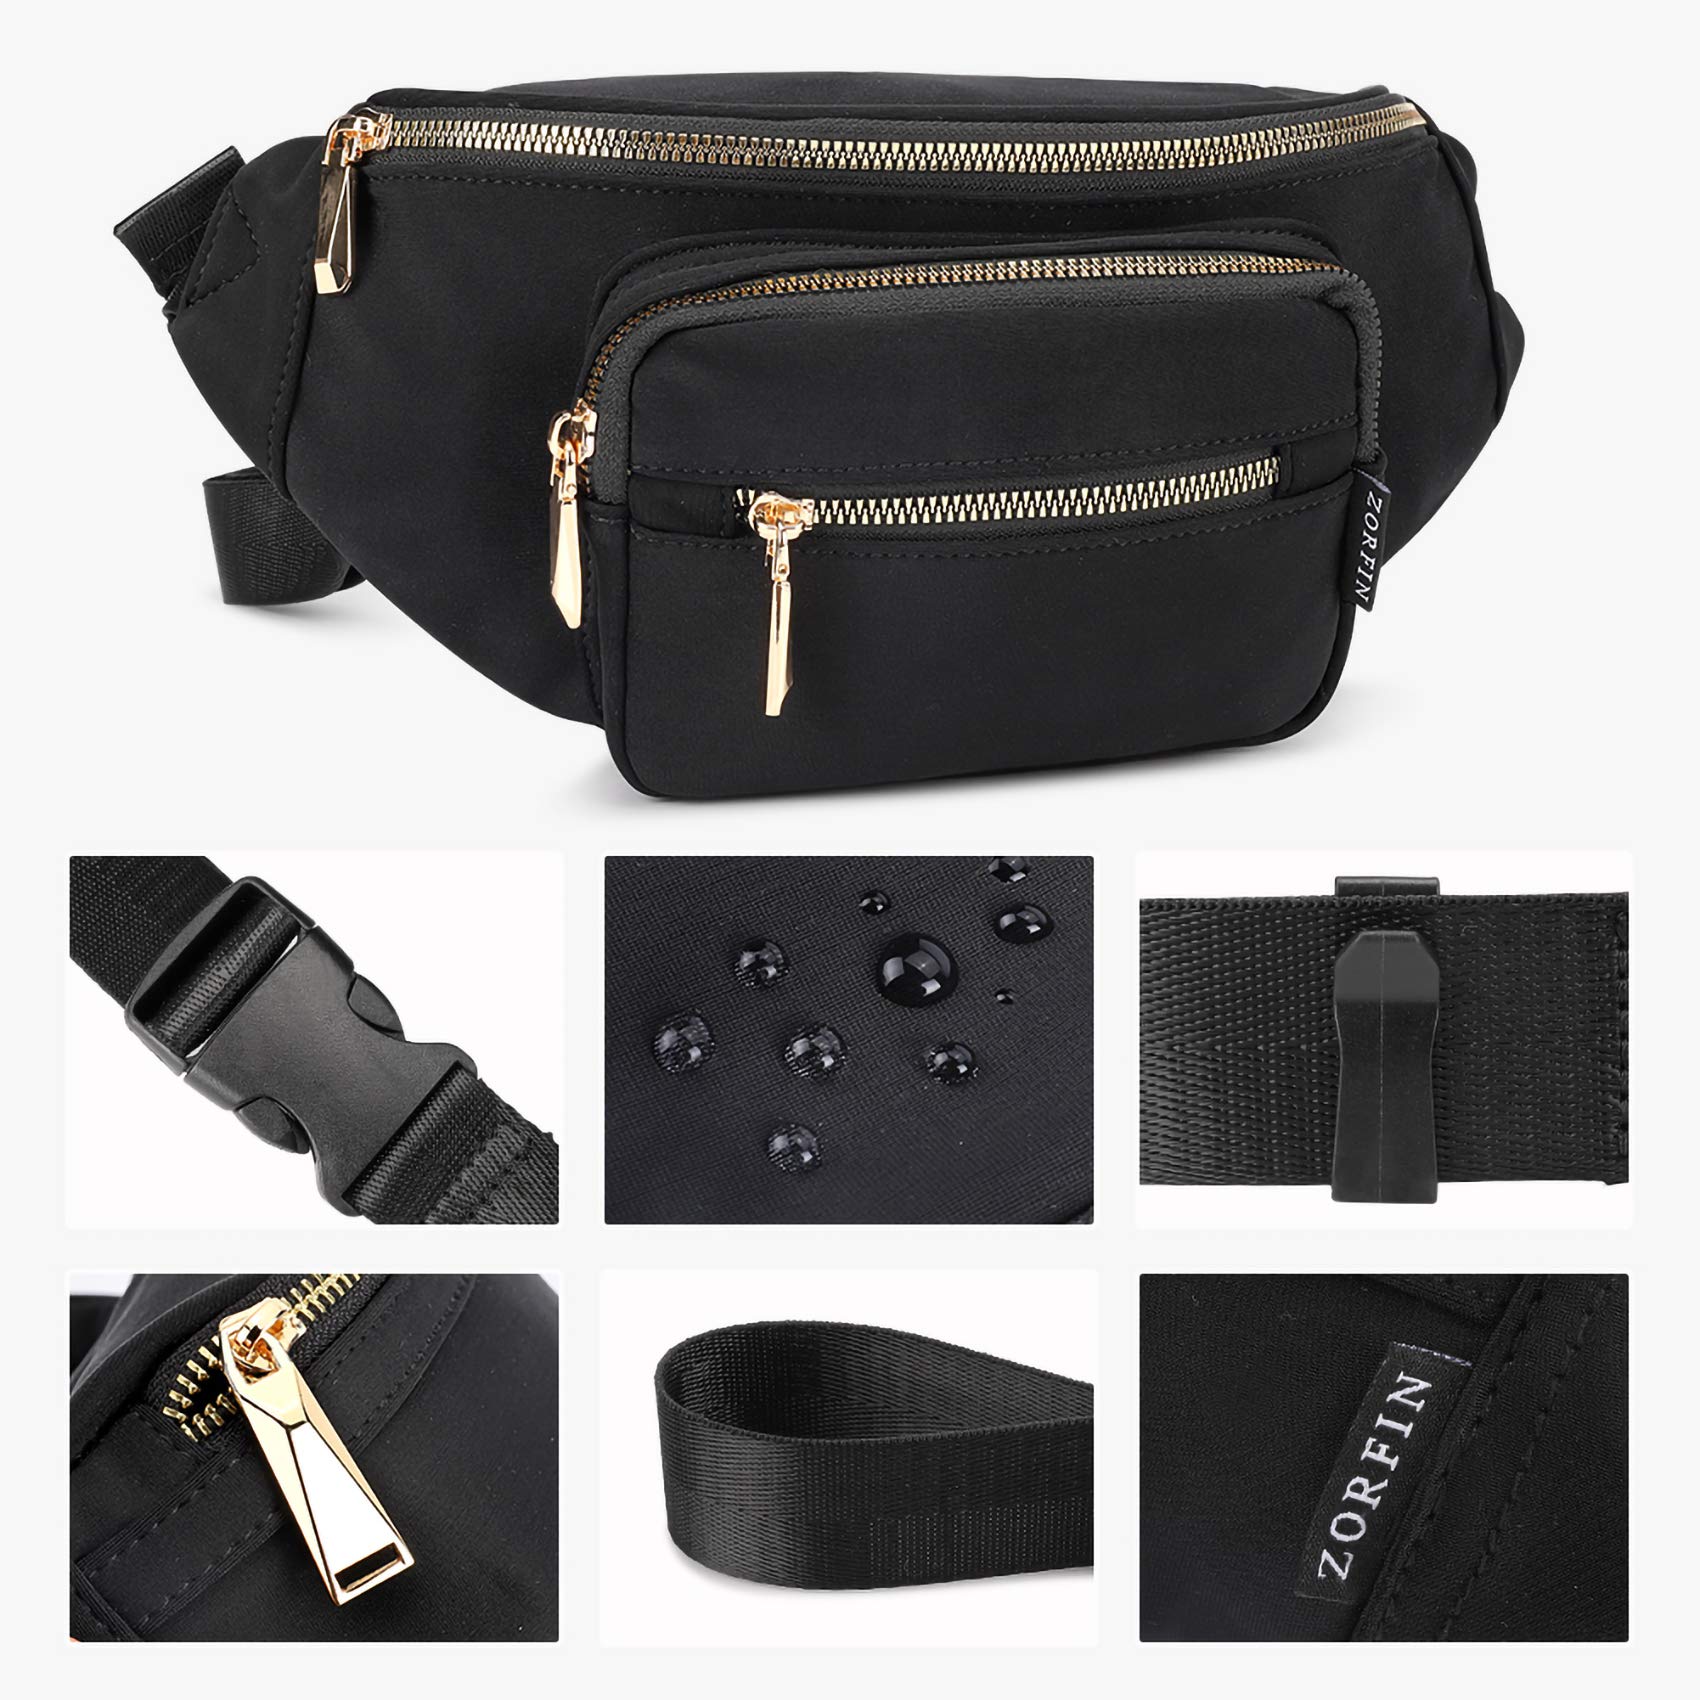 ZORFIN Fanny Packs for Women Men, Fashion Waist Packs, Lightweight Crossbody Bags Belt Bag for Women with Adjustable Strap for Shopping/Casual/Running (Black)